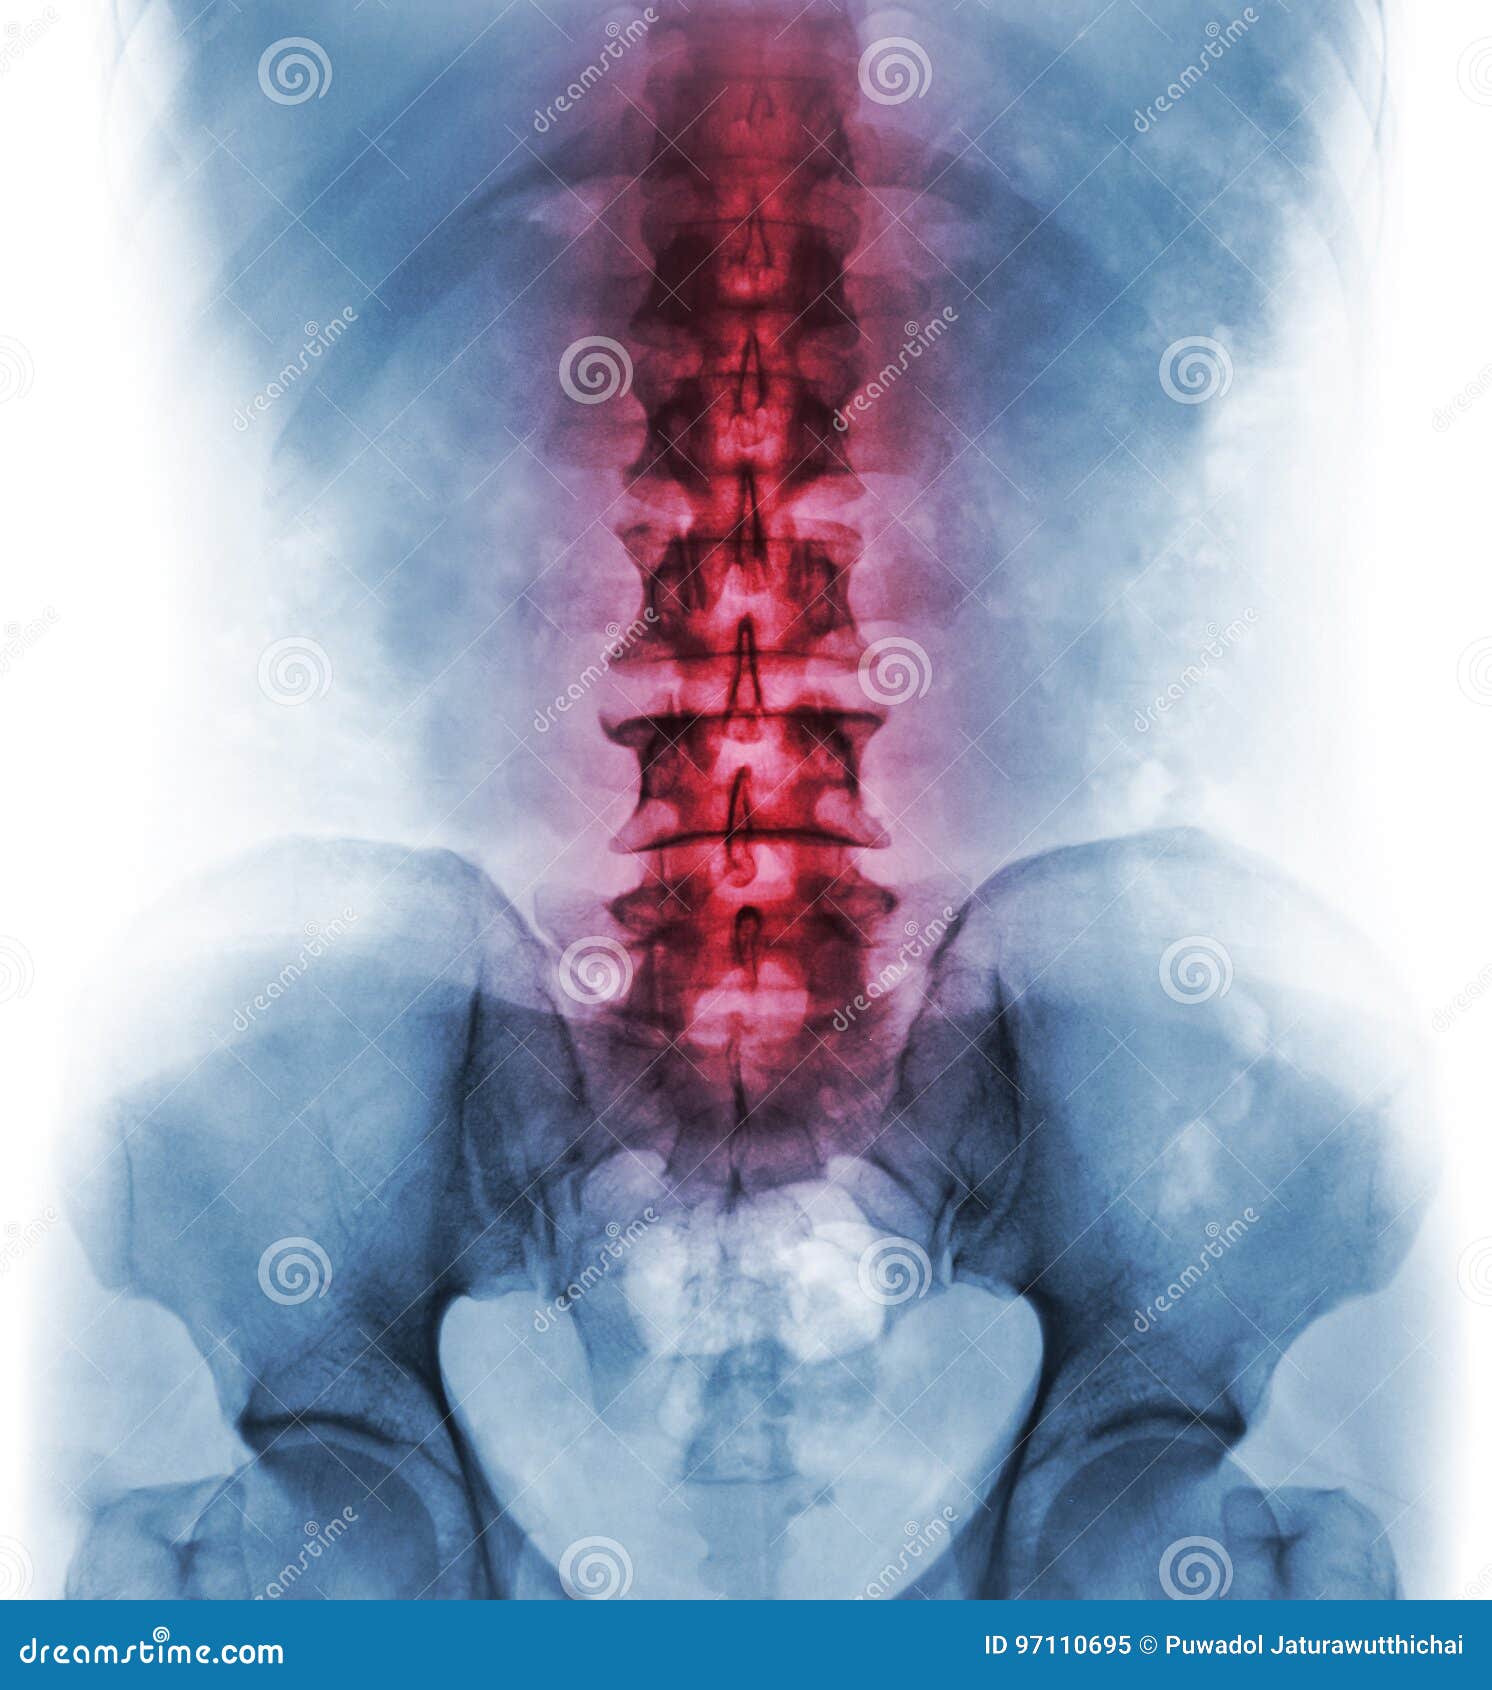 inflammation of lumbosacral spine . concept of vertebral care